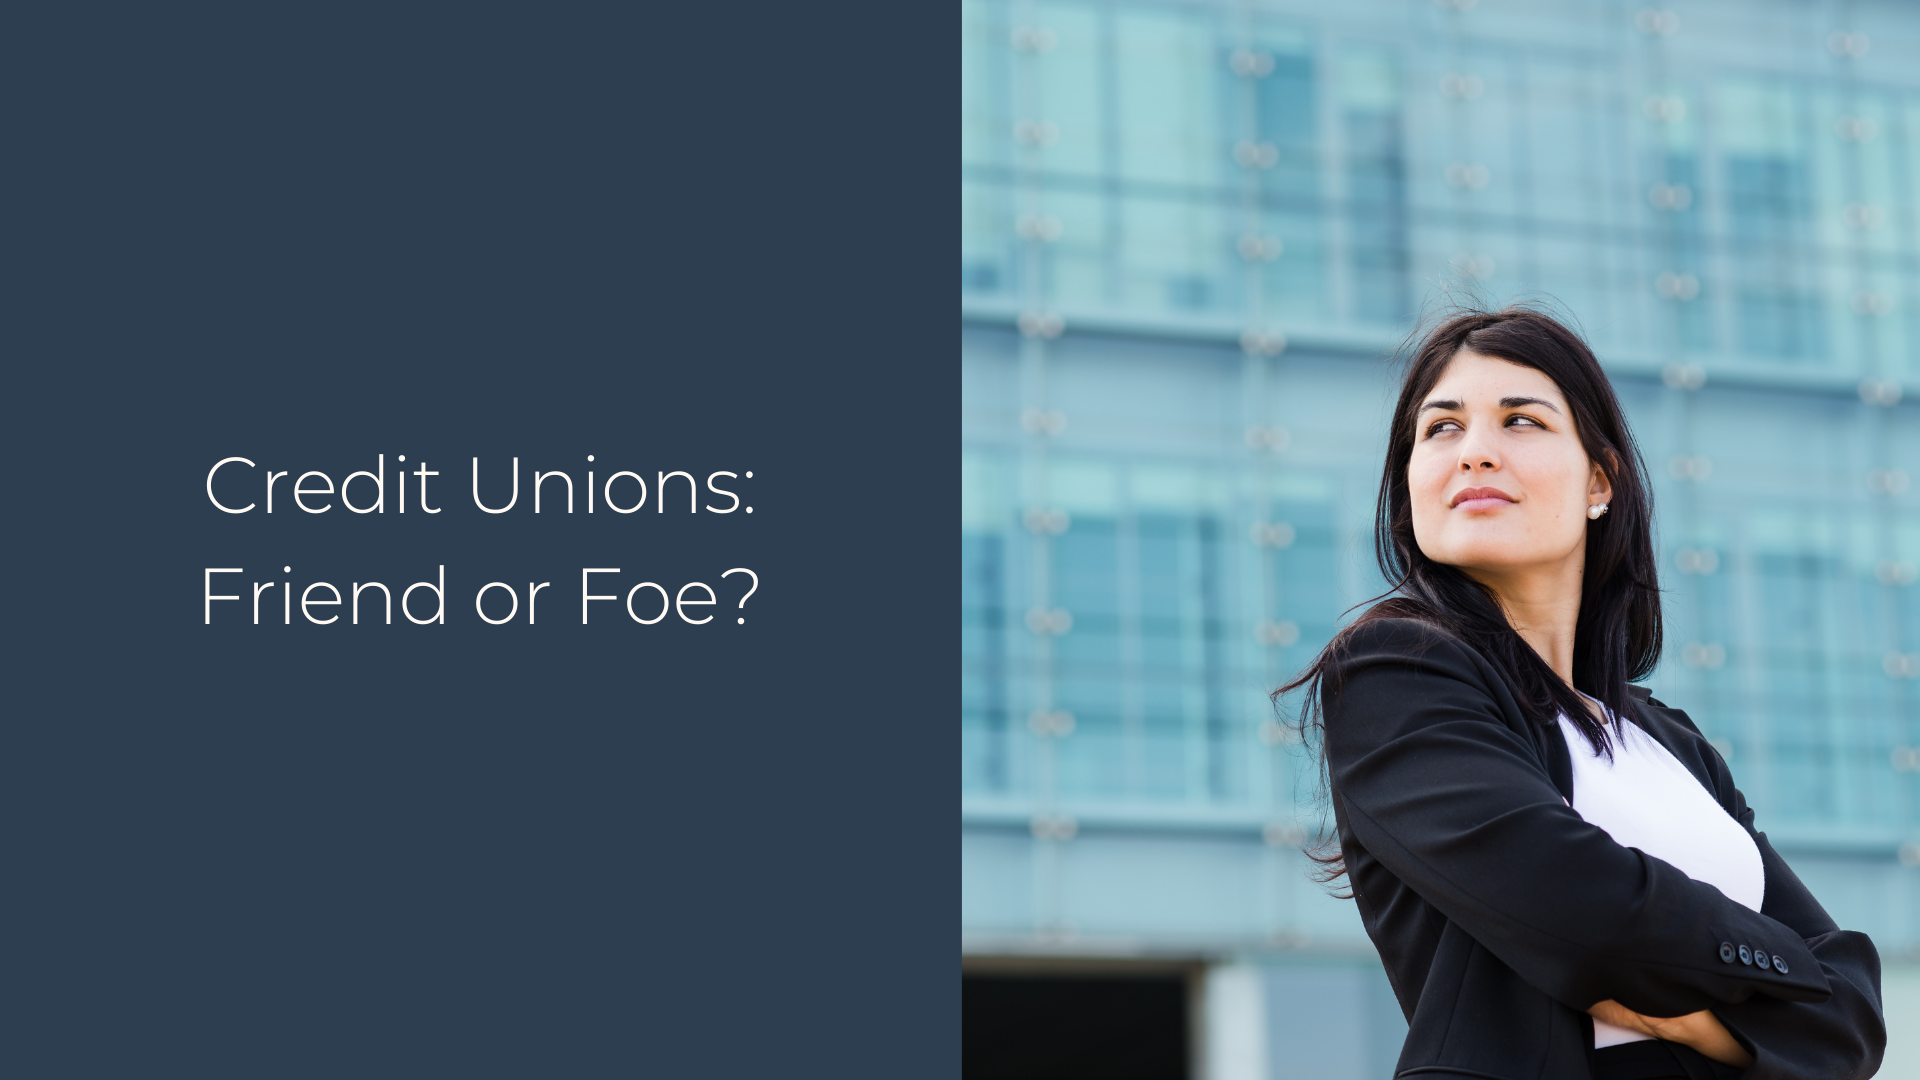 Credit Unions: Friend or Foe?